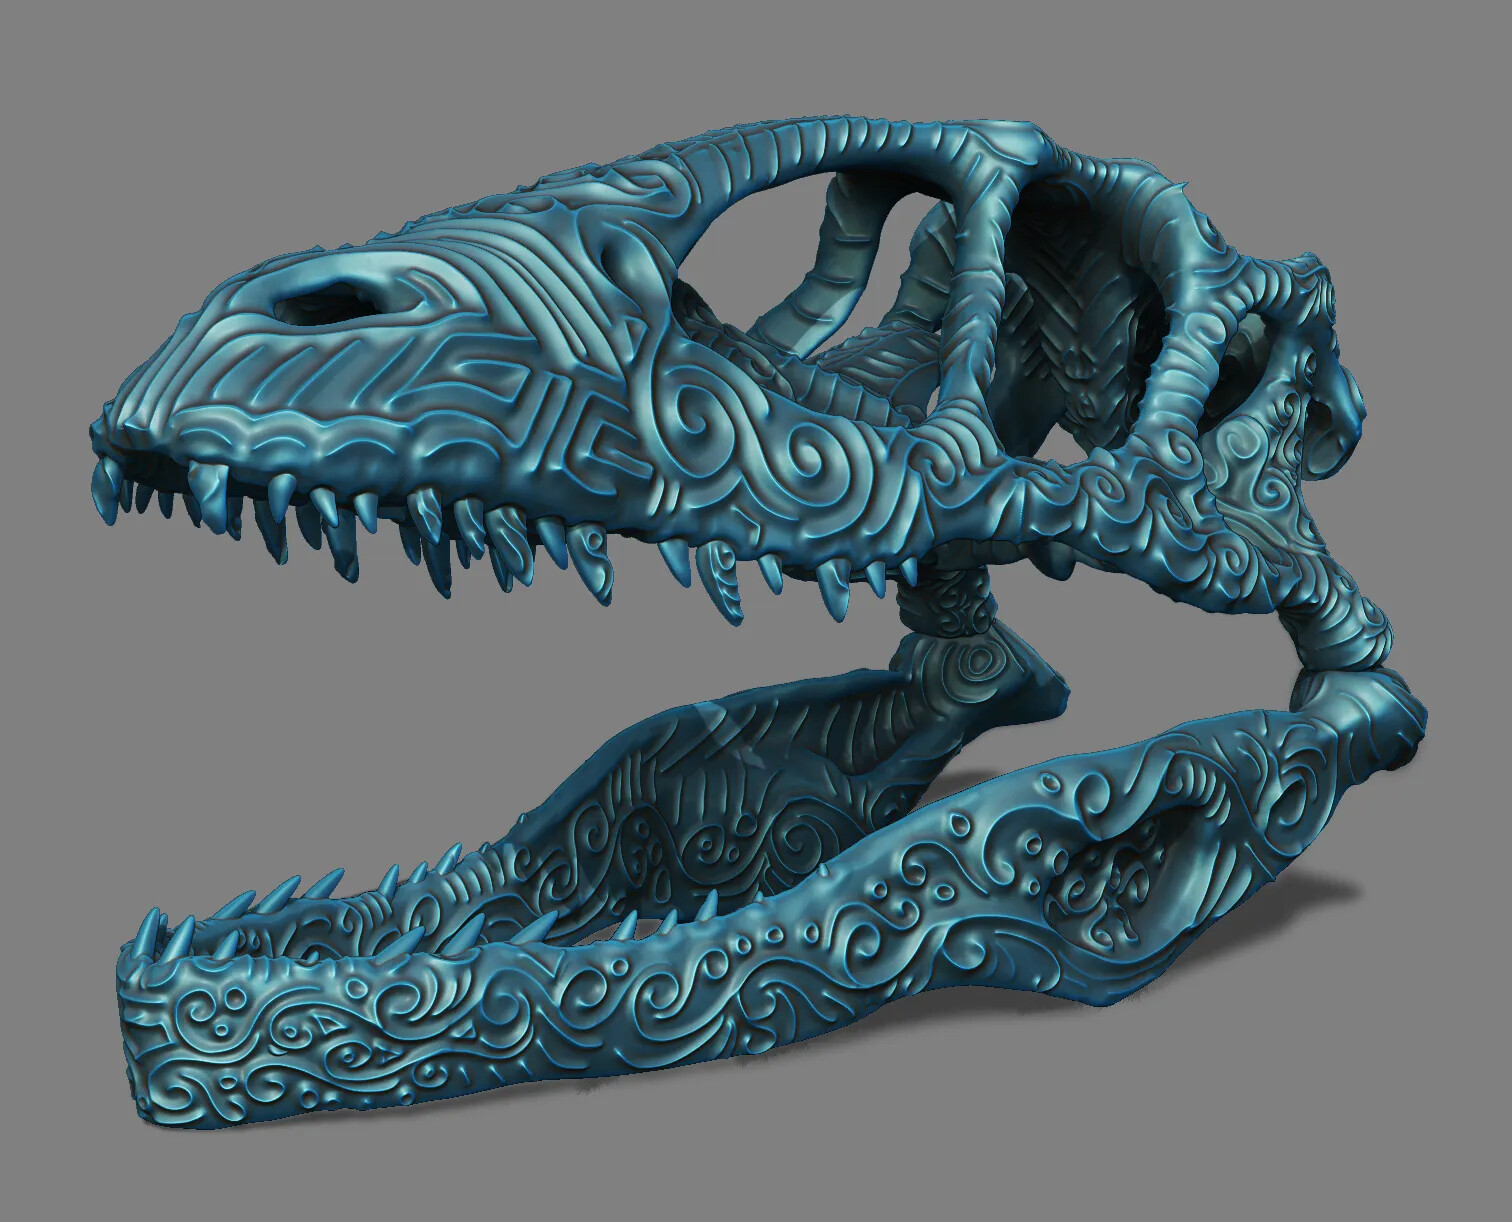 Various Decorative Filigree Animal Skulls for 3D Printing